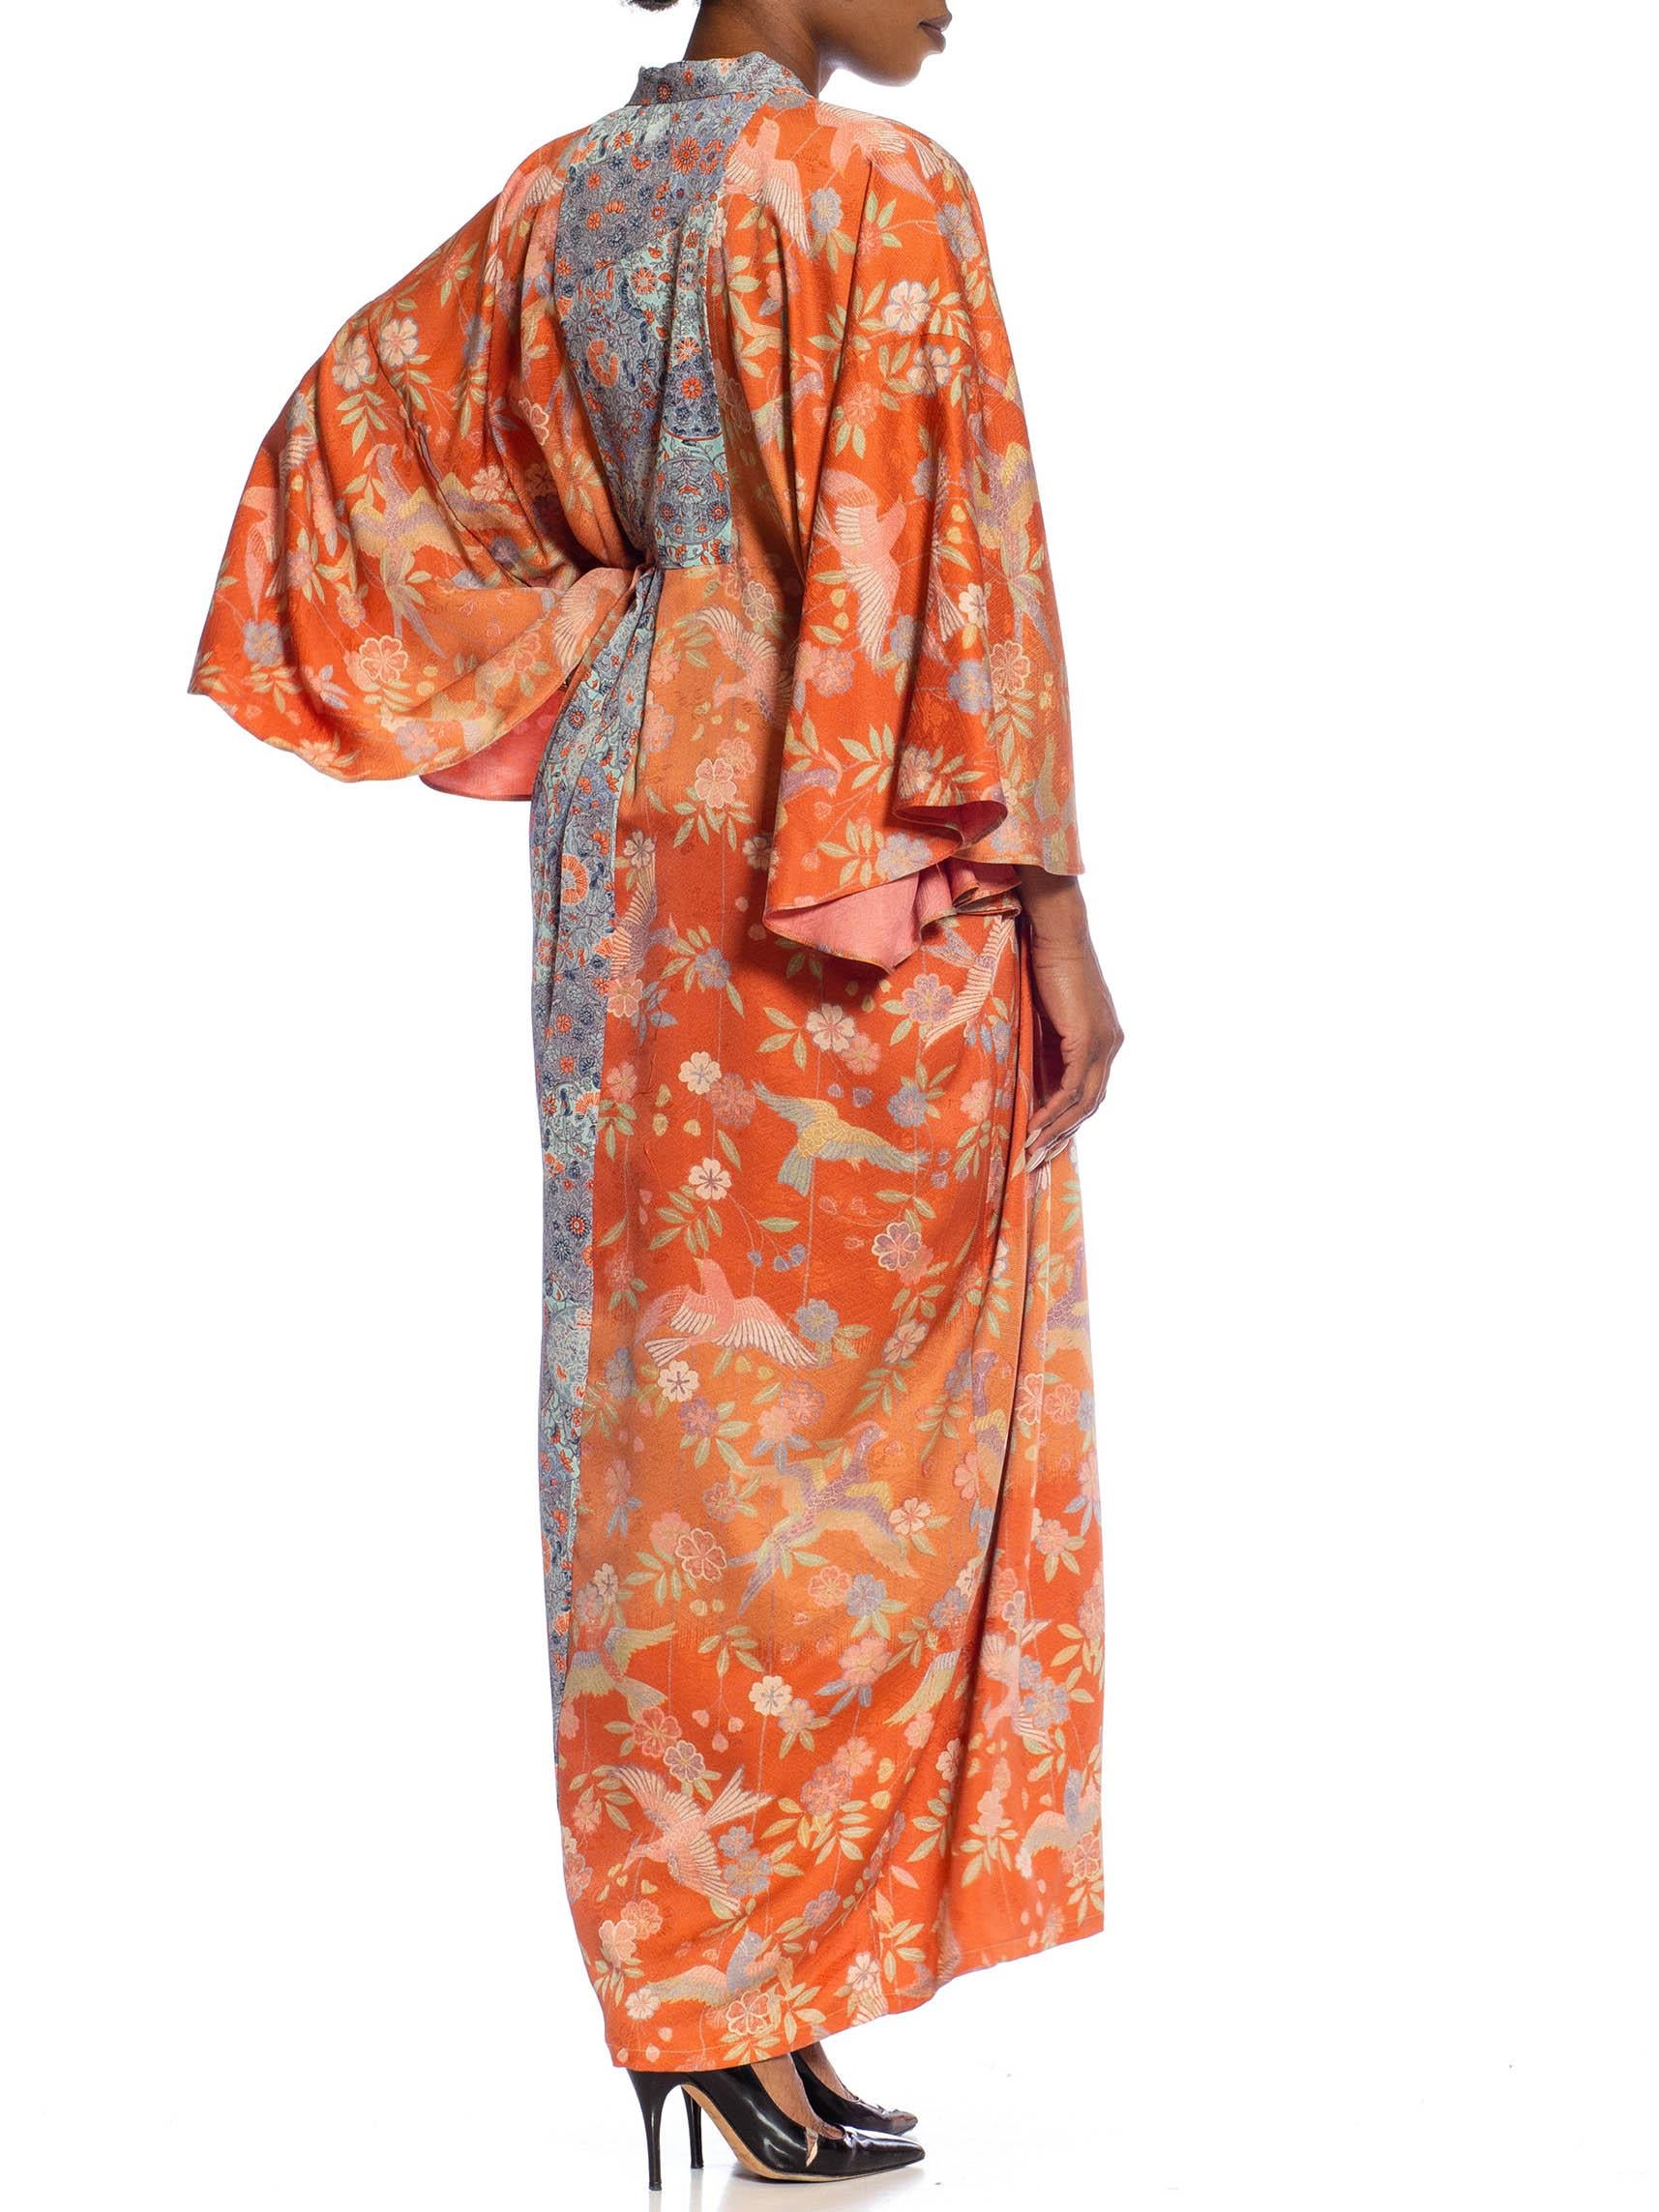 MORPHEW COLLECTION Orange Ombré Floral Japanese Kimono Silk Kaftan 1